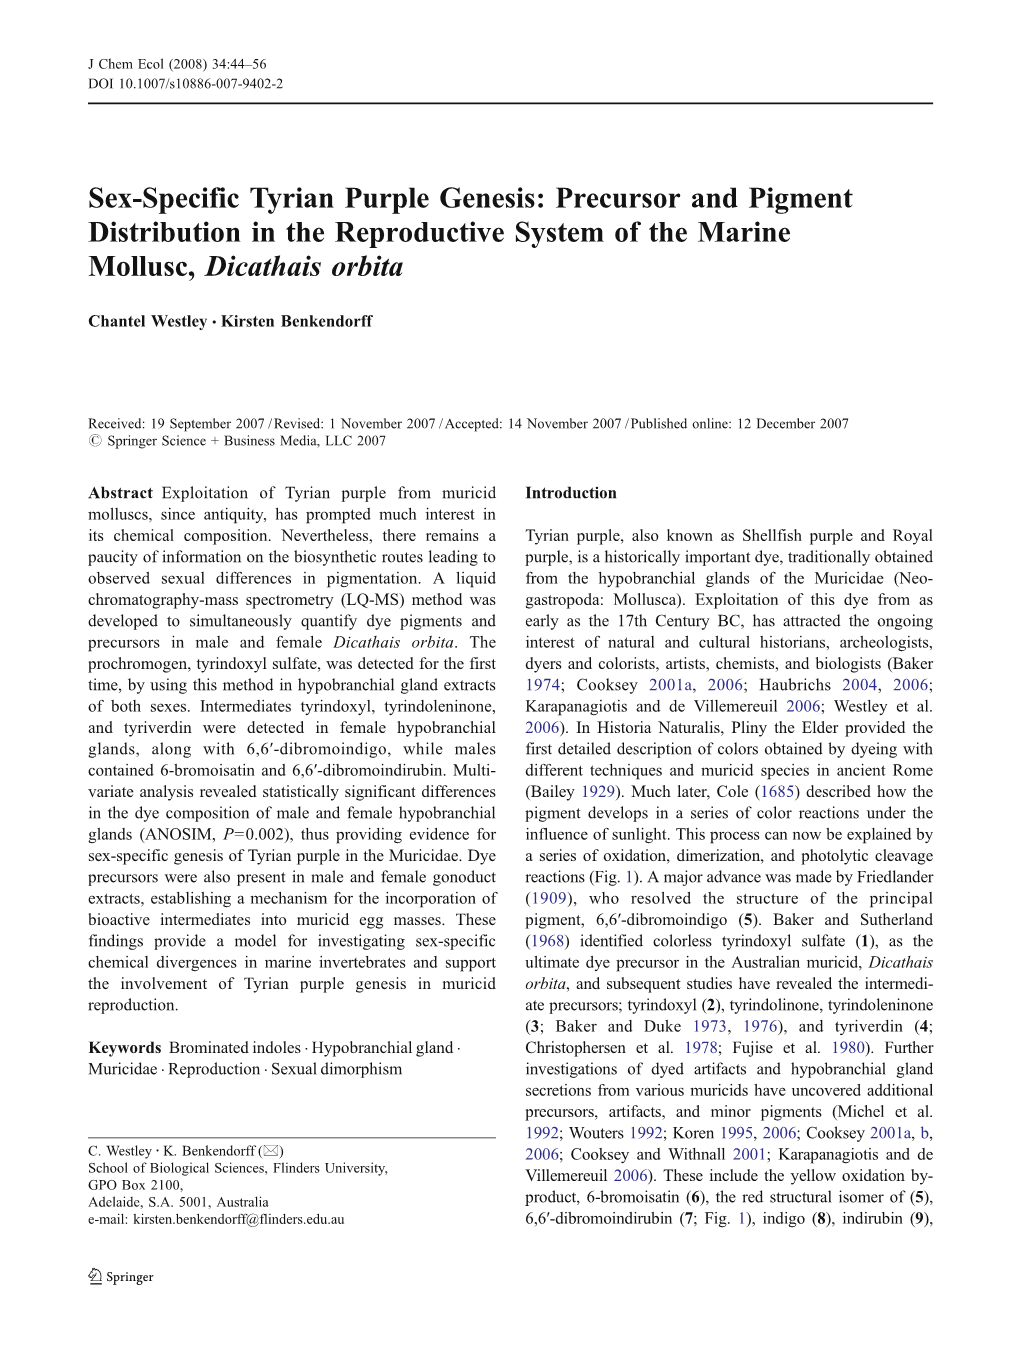 Sex-Specific Tyrian Purple Genesis: Precursor and Pigment Distribution in the Reproductive System of the Marine Mollusc, Dicathais Orbita